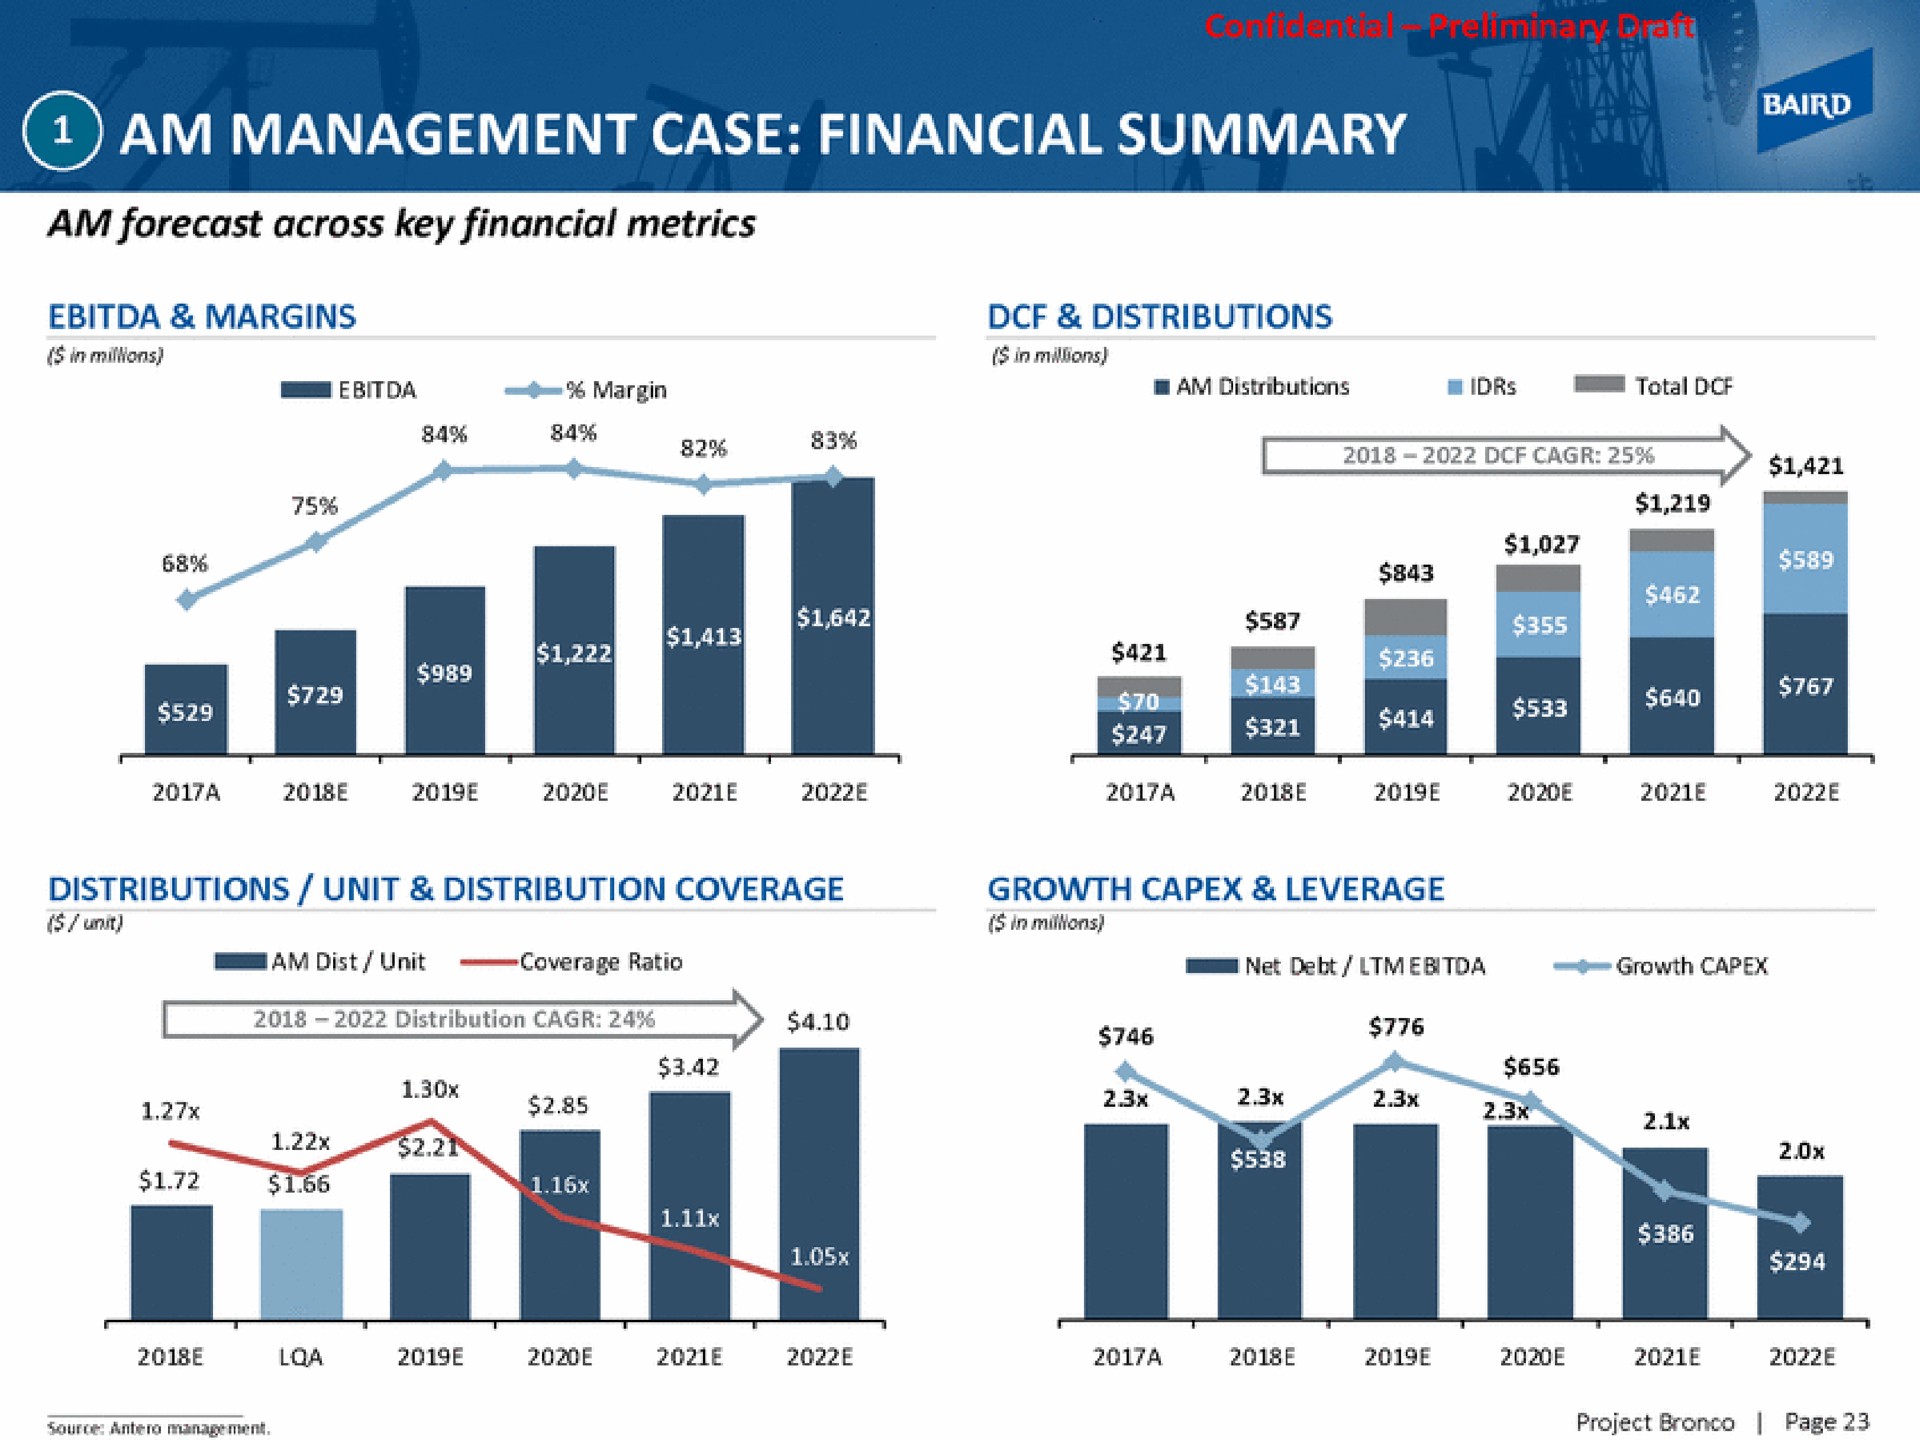 am management case financial summary | Baird